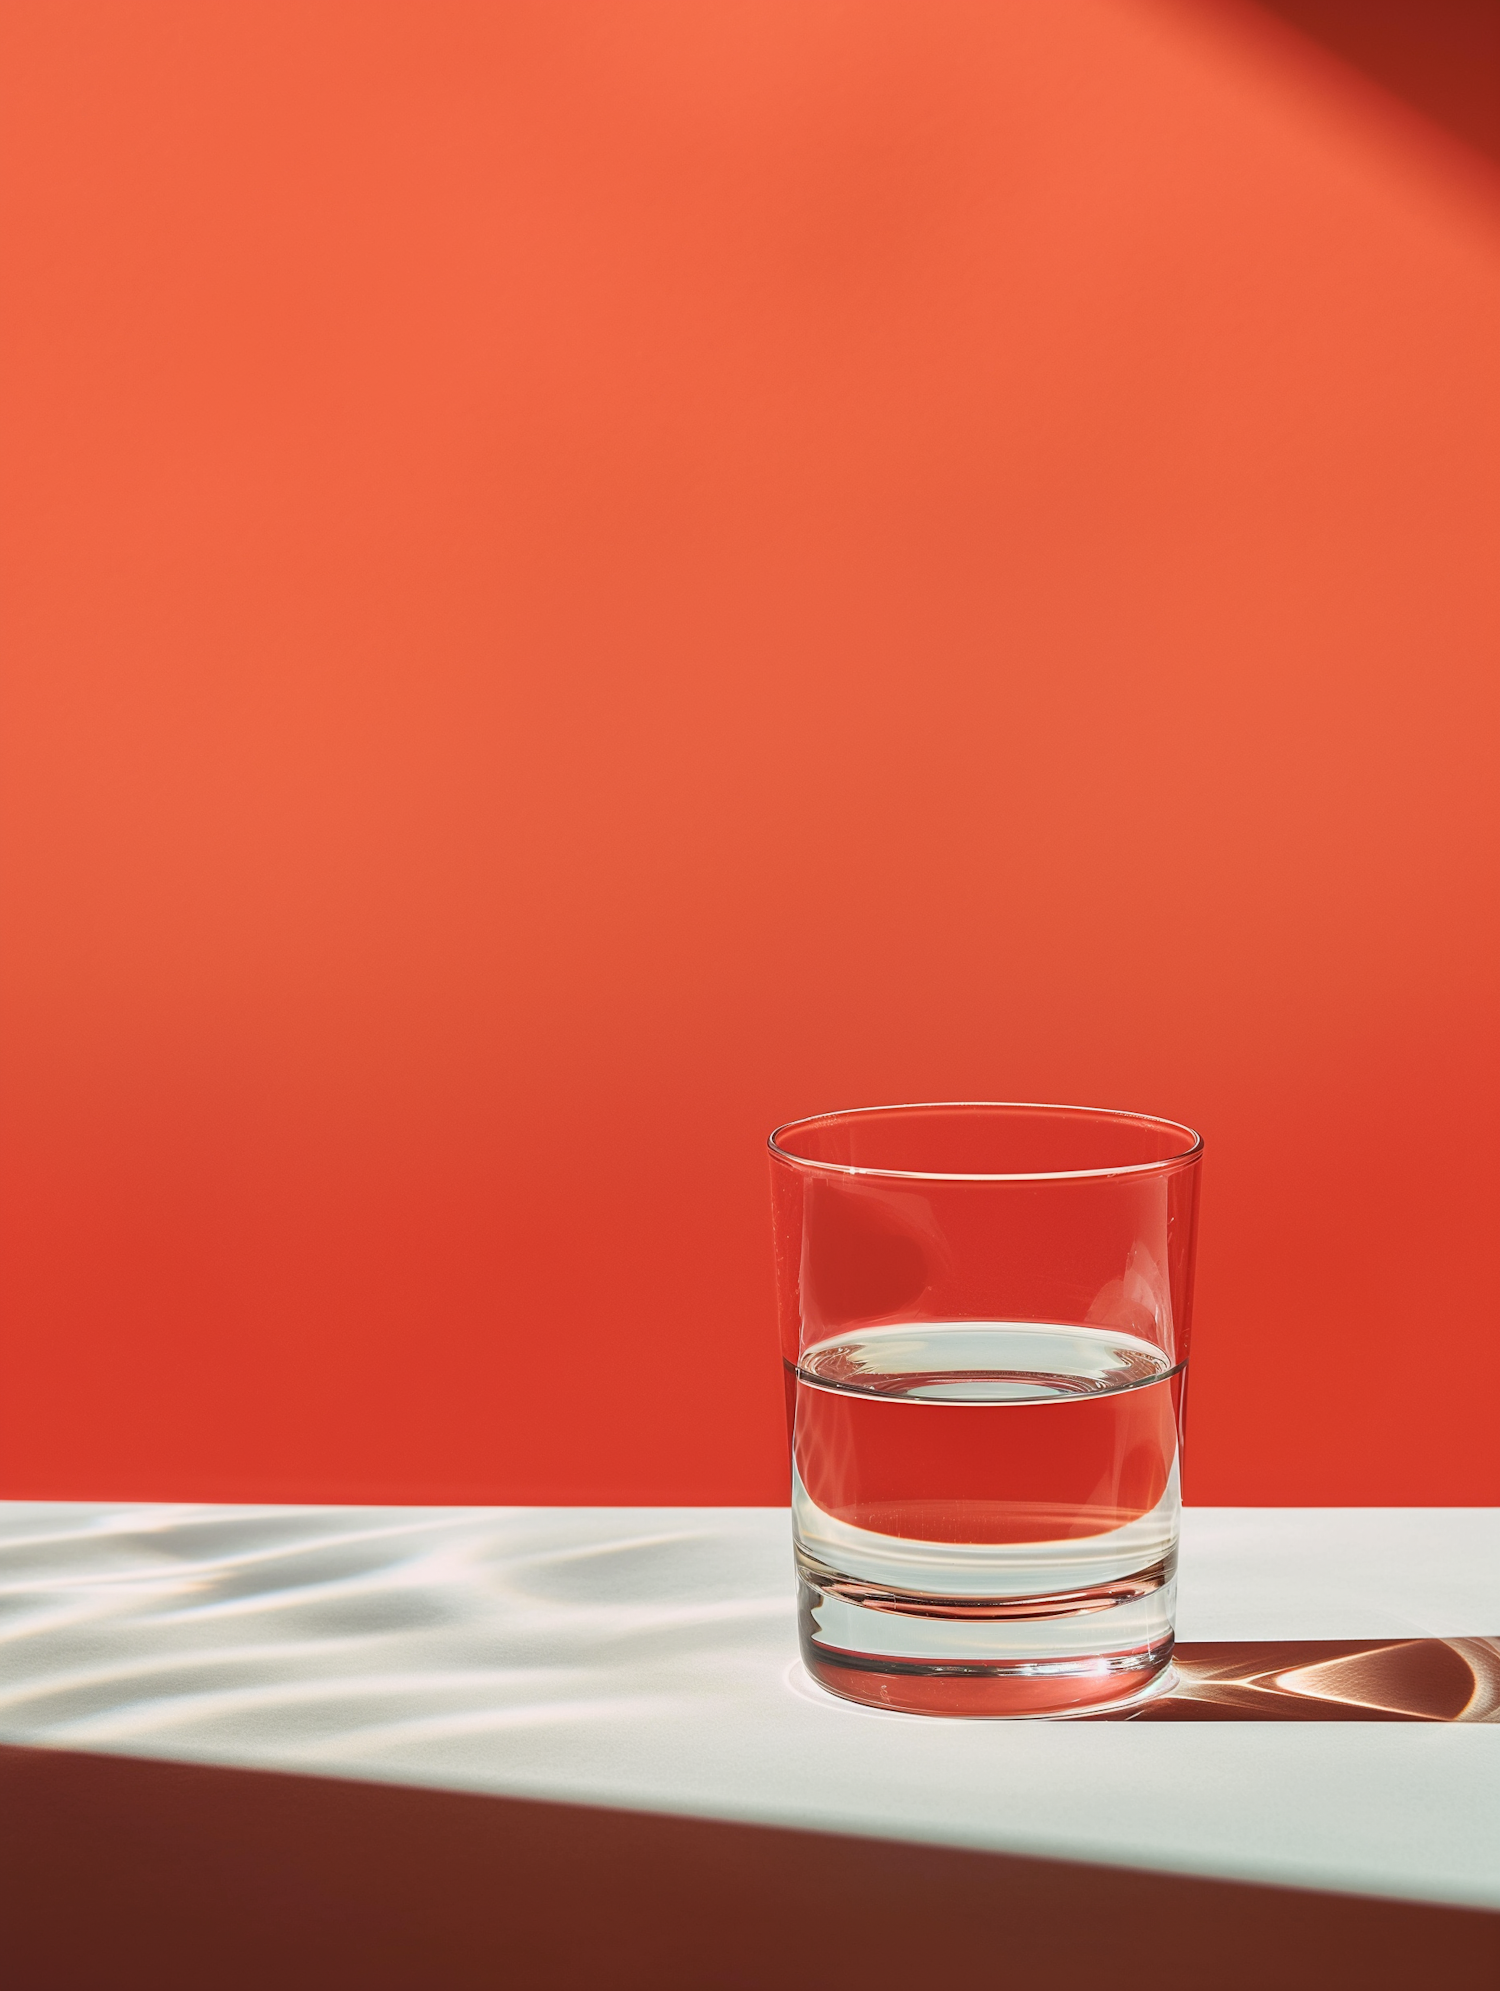 Minimalist Glass of Water